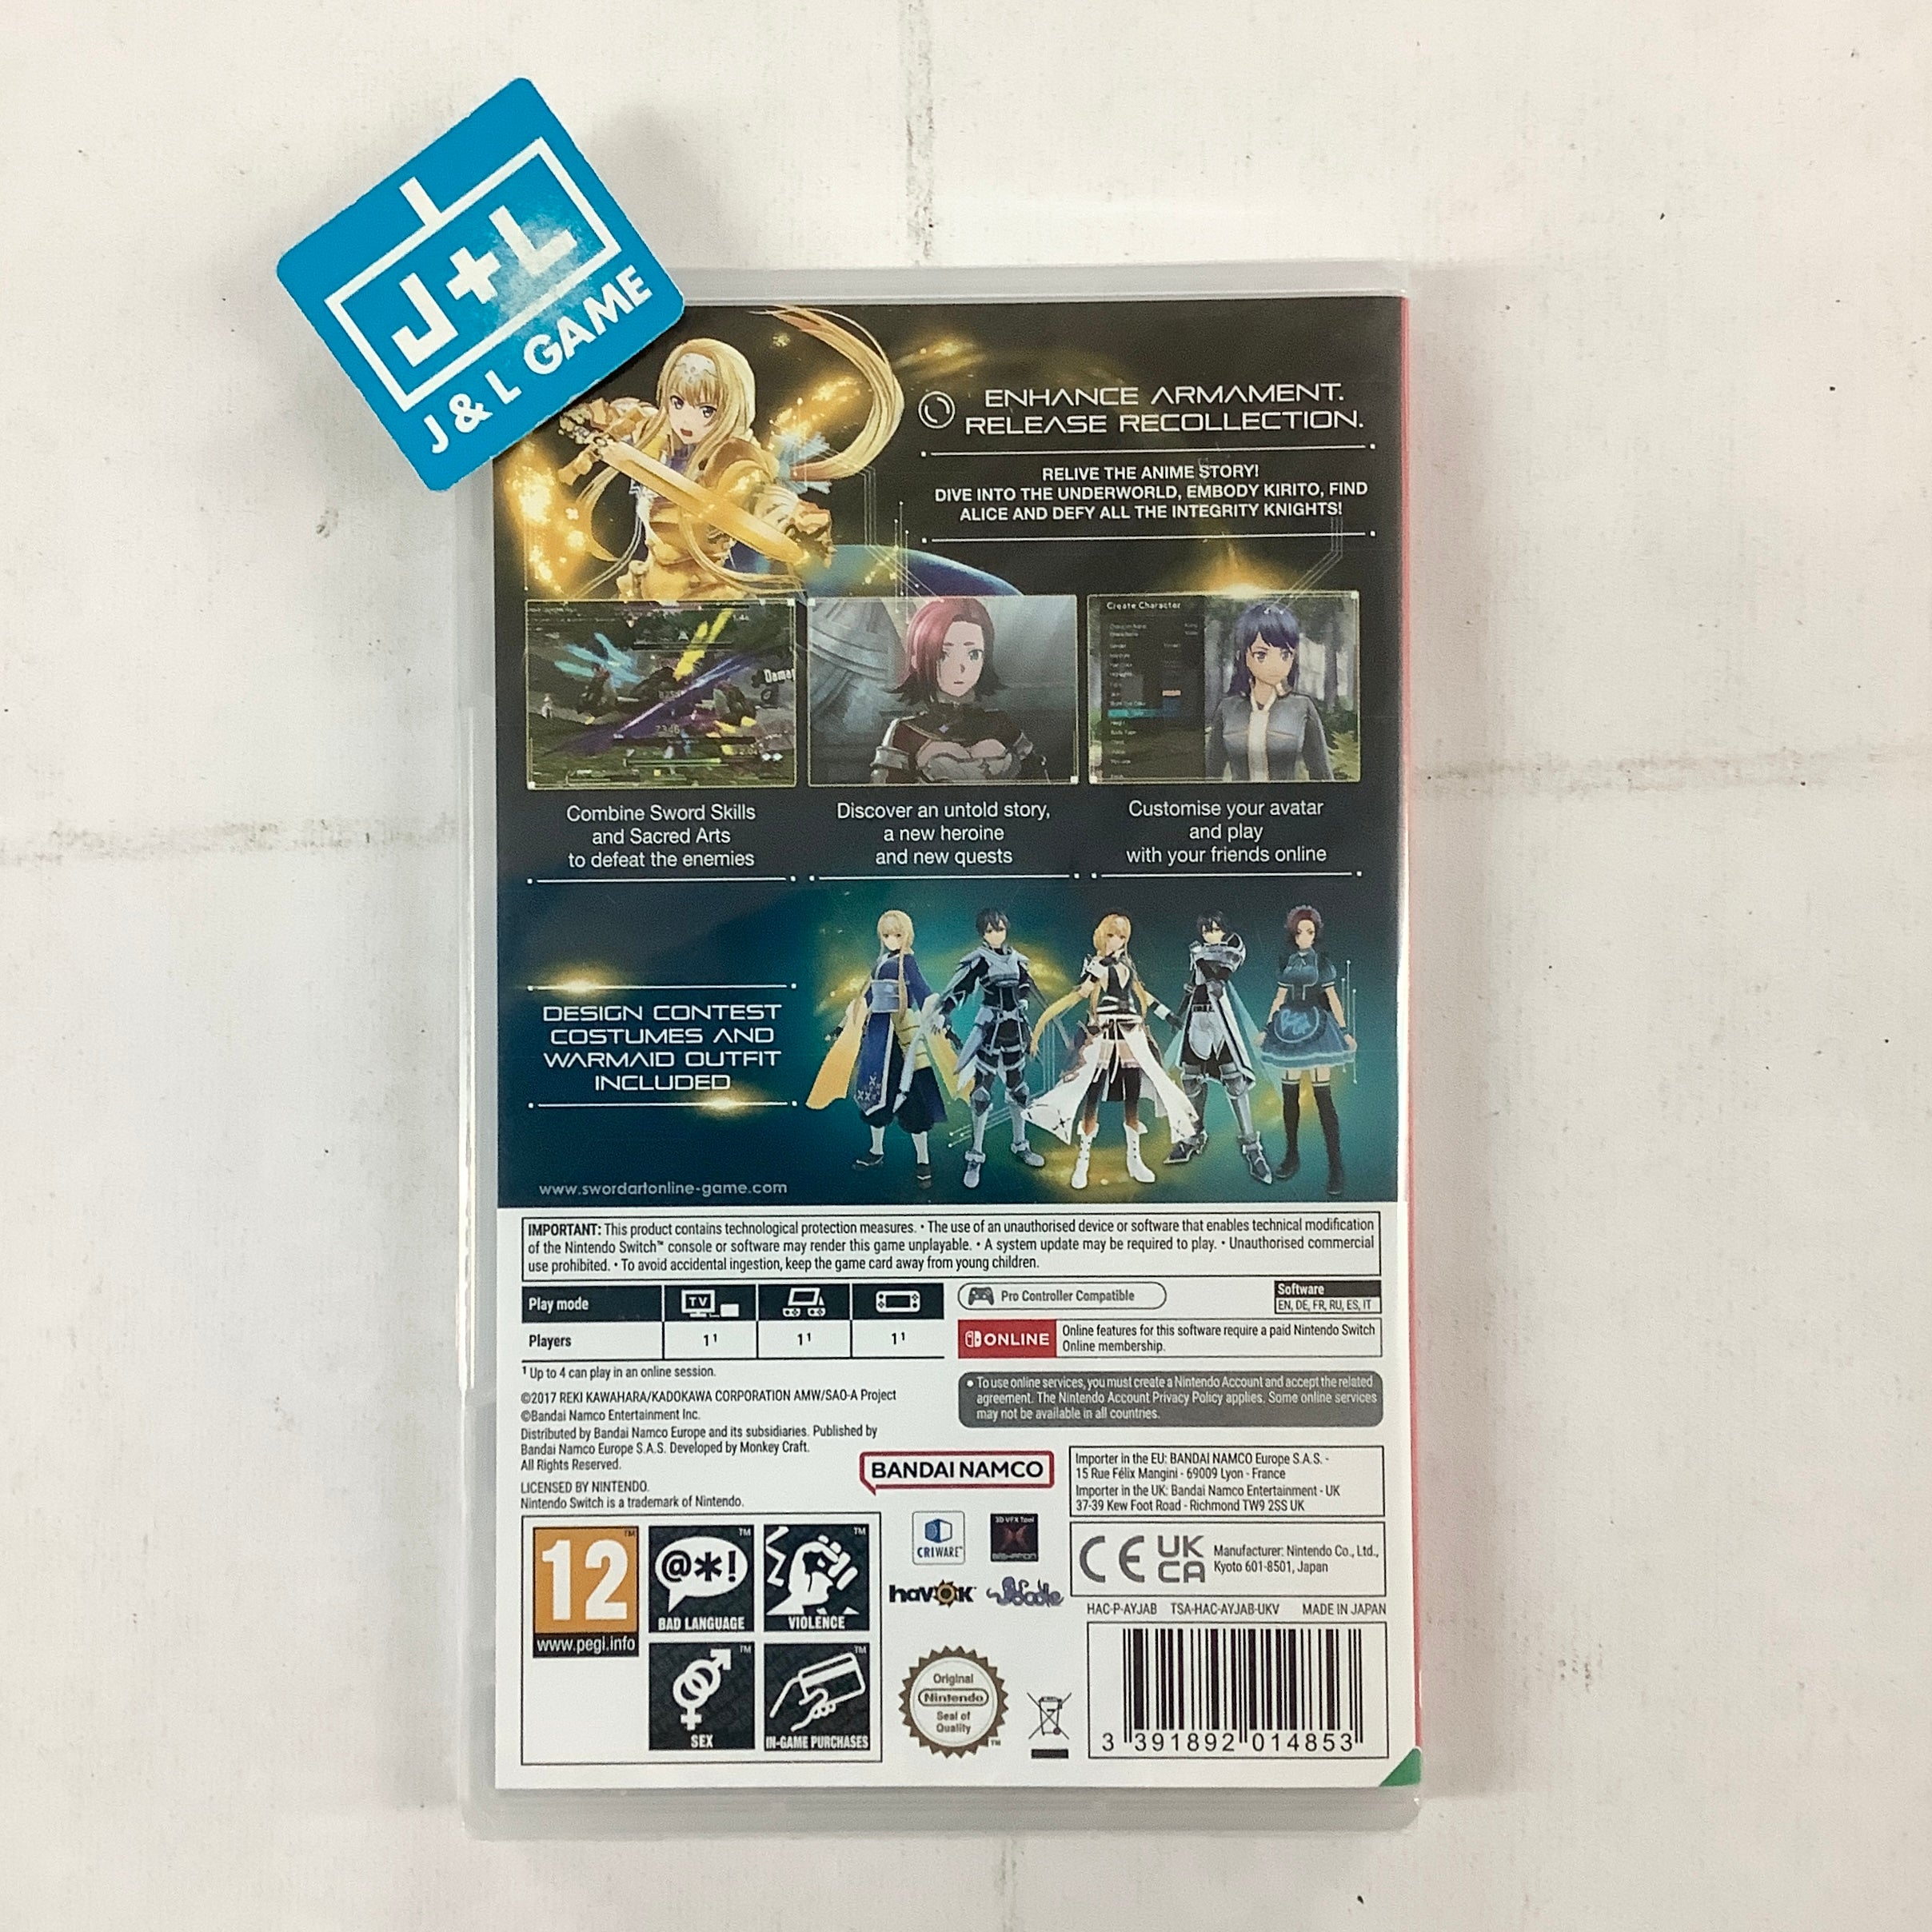 Sword Art Online: Alicization Lycoris - (NSW) Nintendo Switch (European Import) Video Games BANDAI NAMCO Entertainment   